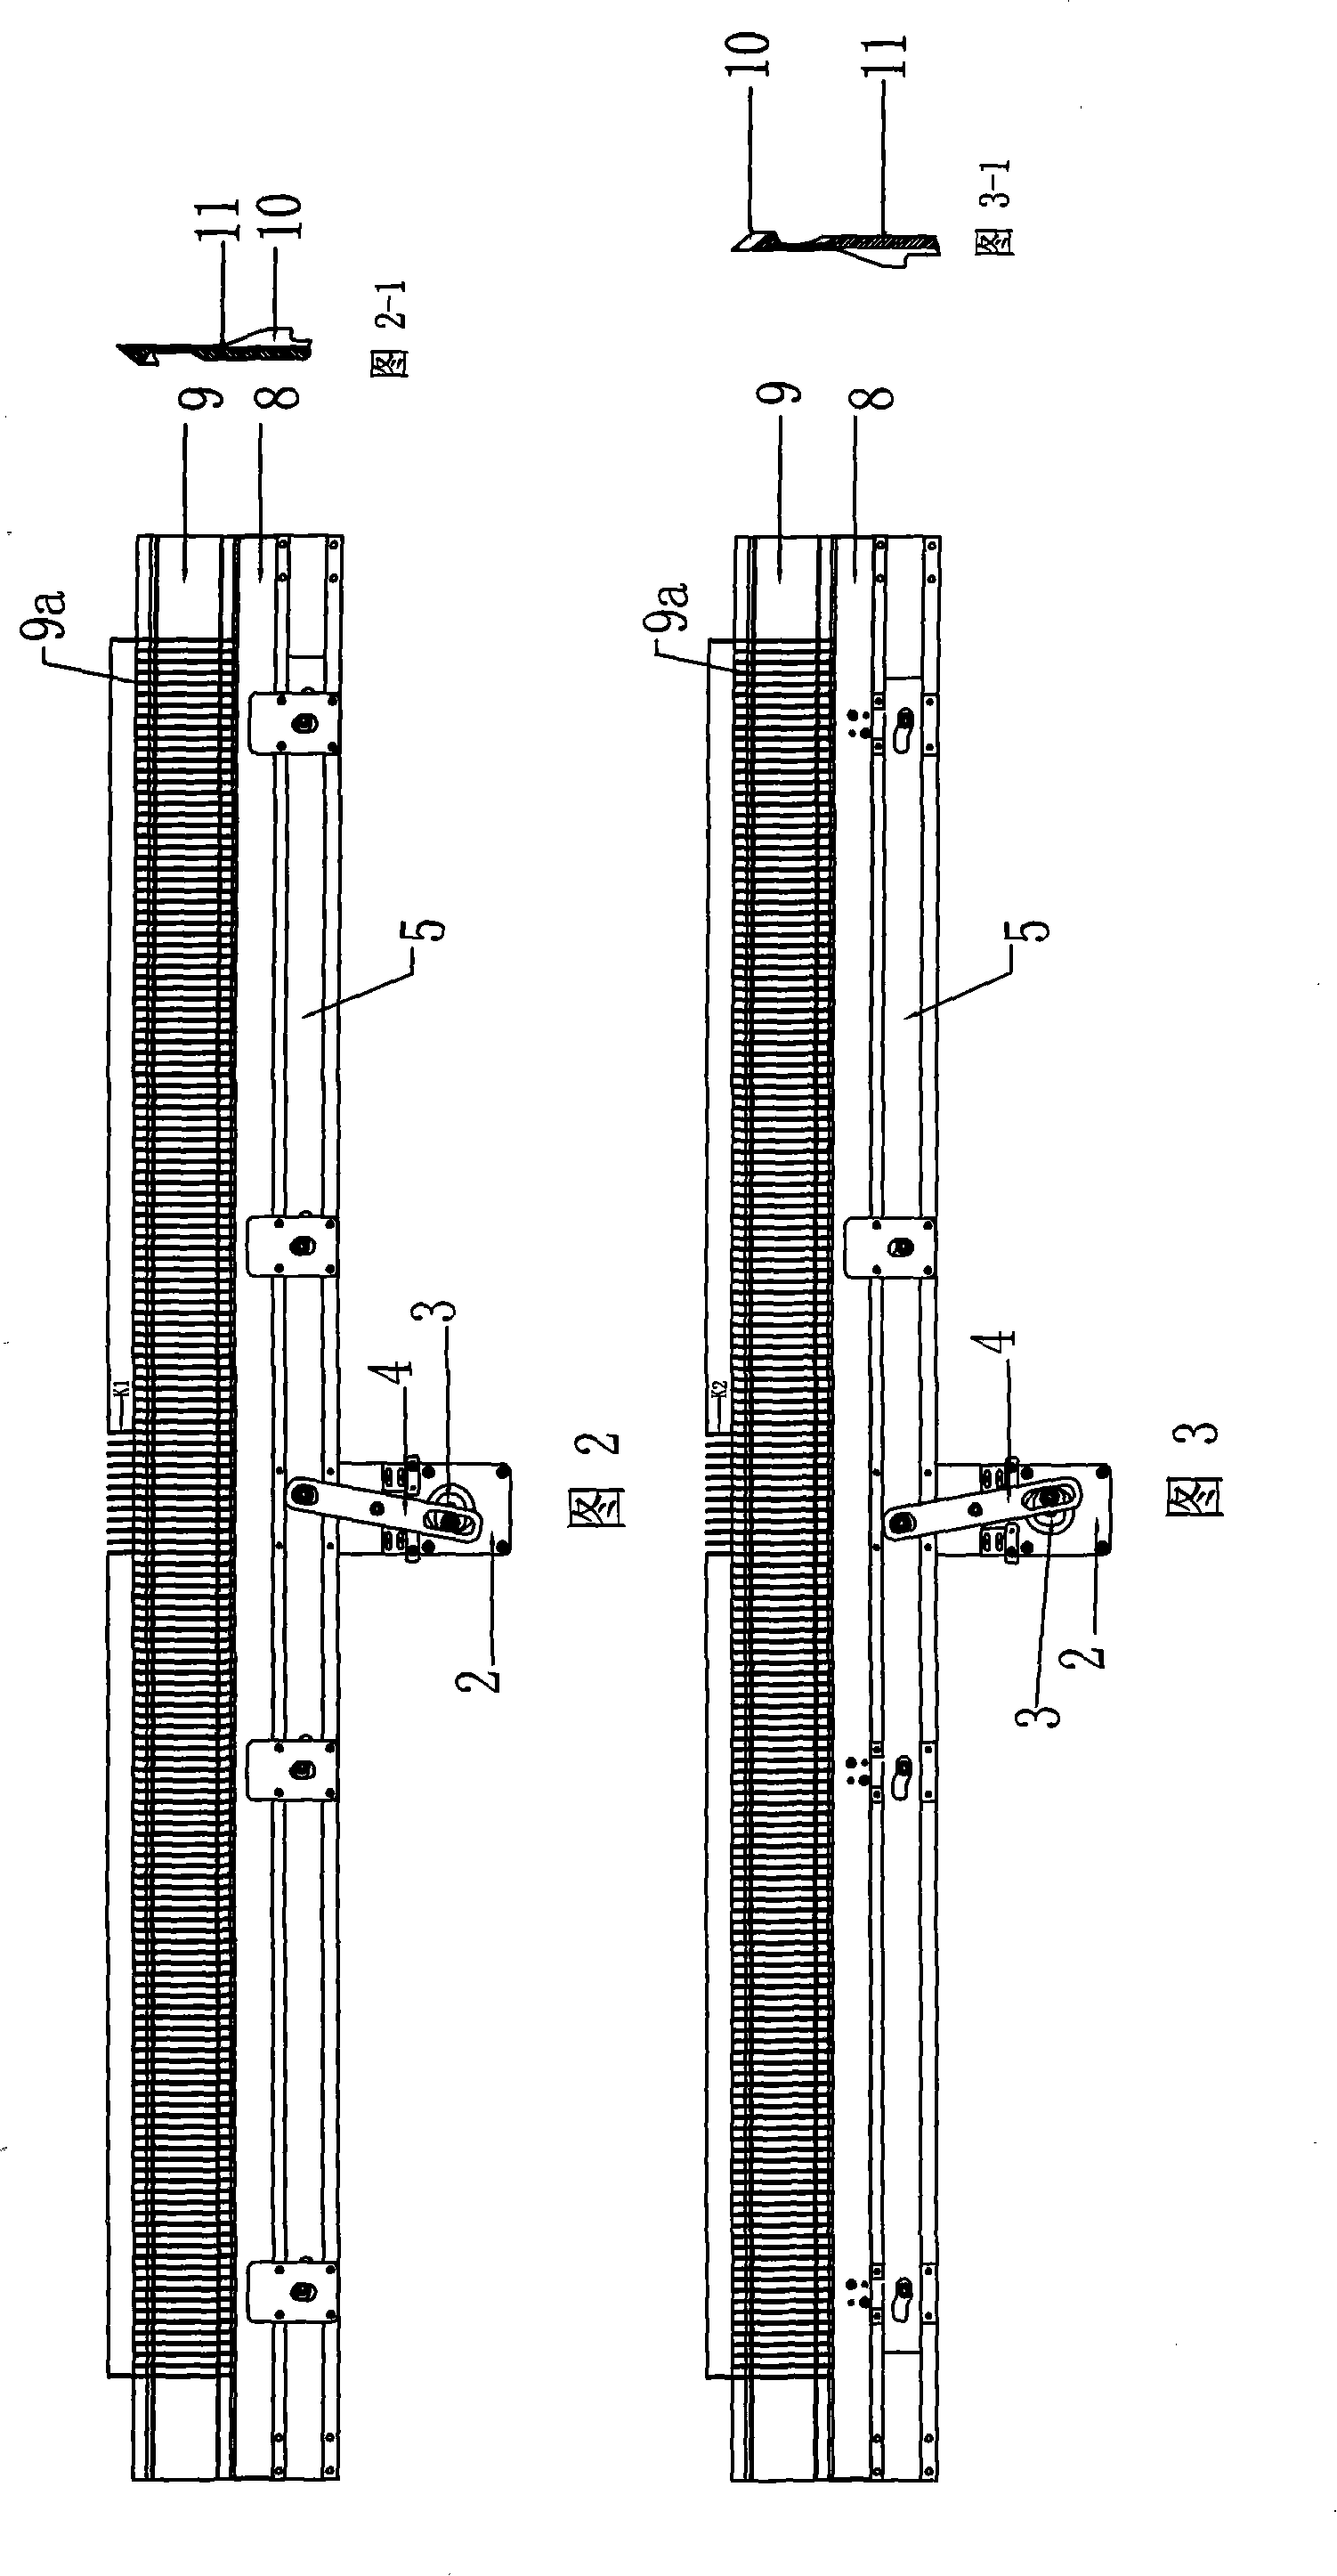 Bottom rising device of knitting horizontal machine